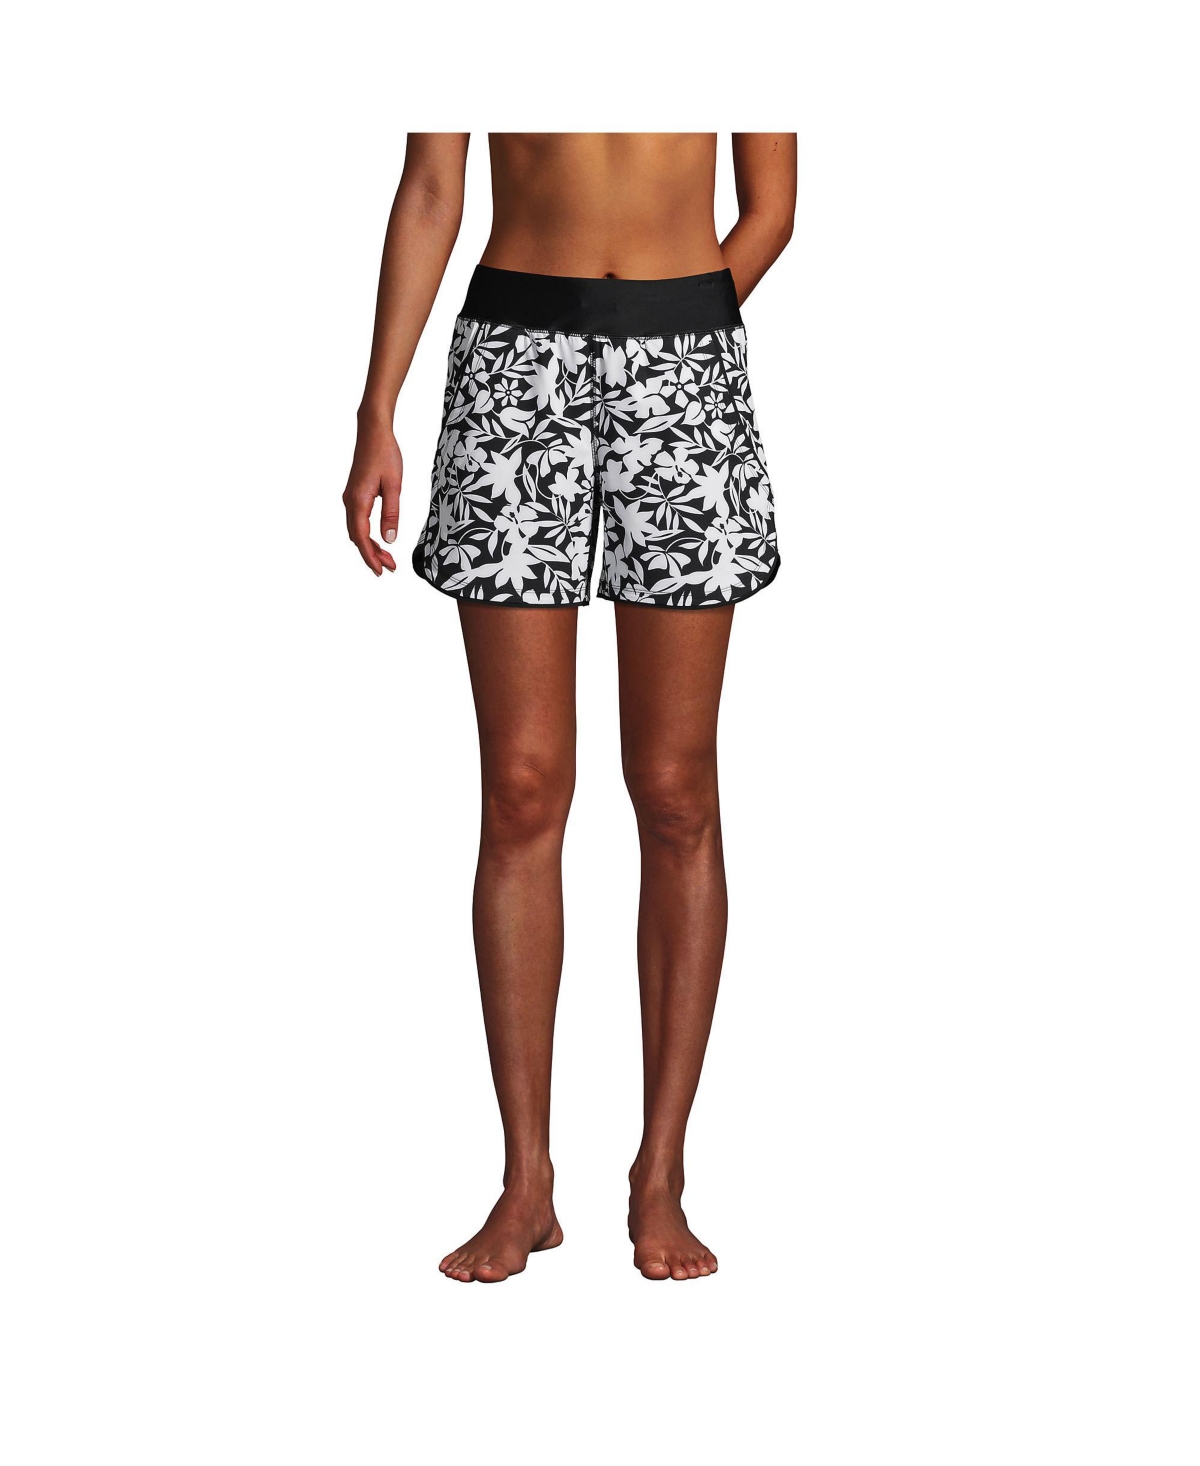 Petite 5" Quick Dry Swim Shorts with Panty - Black havana floral